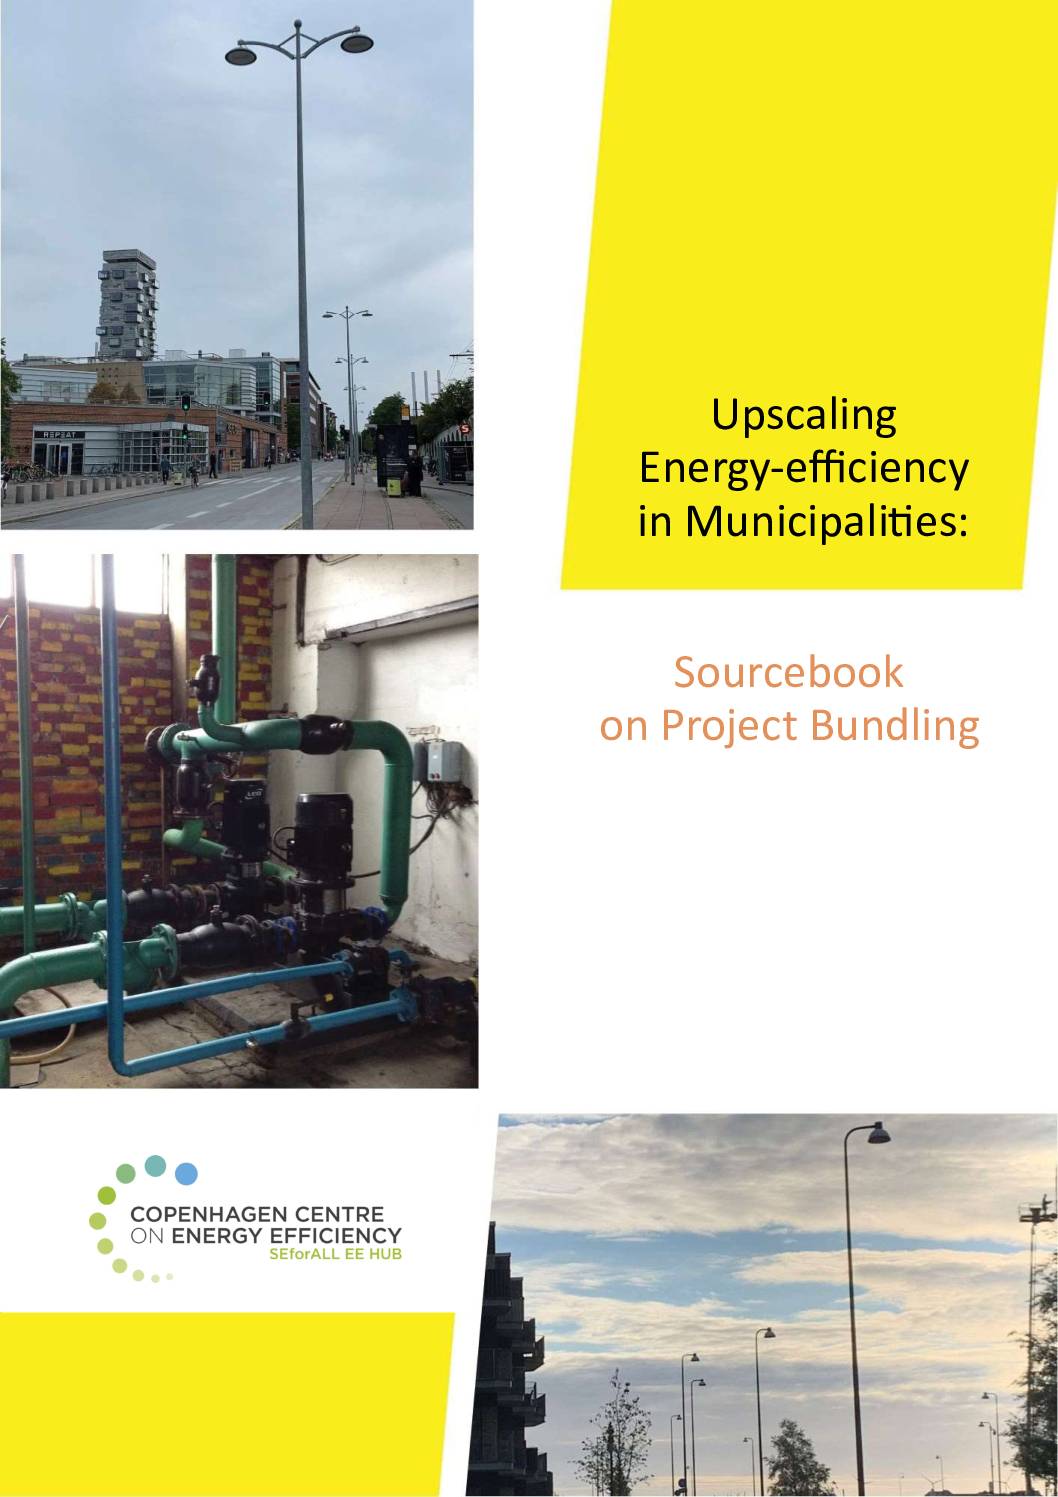 Upscaling Energy-efficiency in Municipalities: Sourcebook on Project Bundling